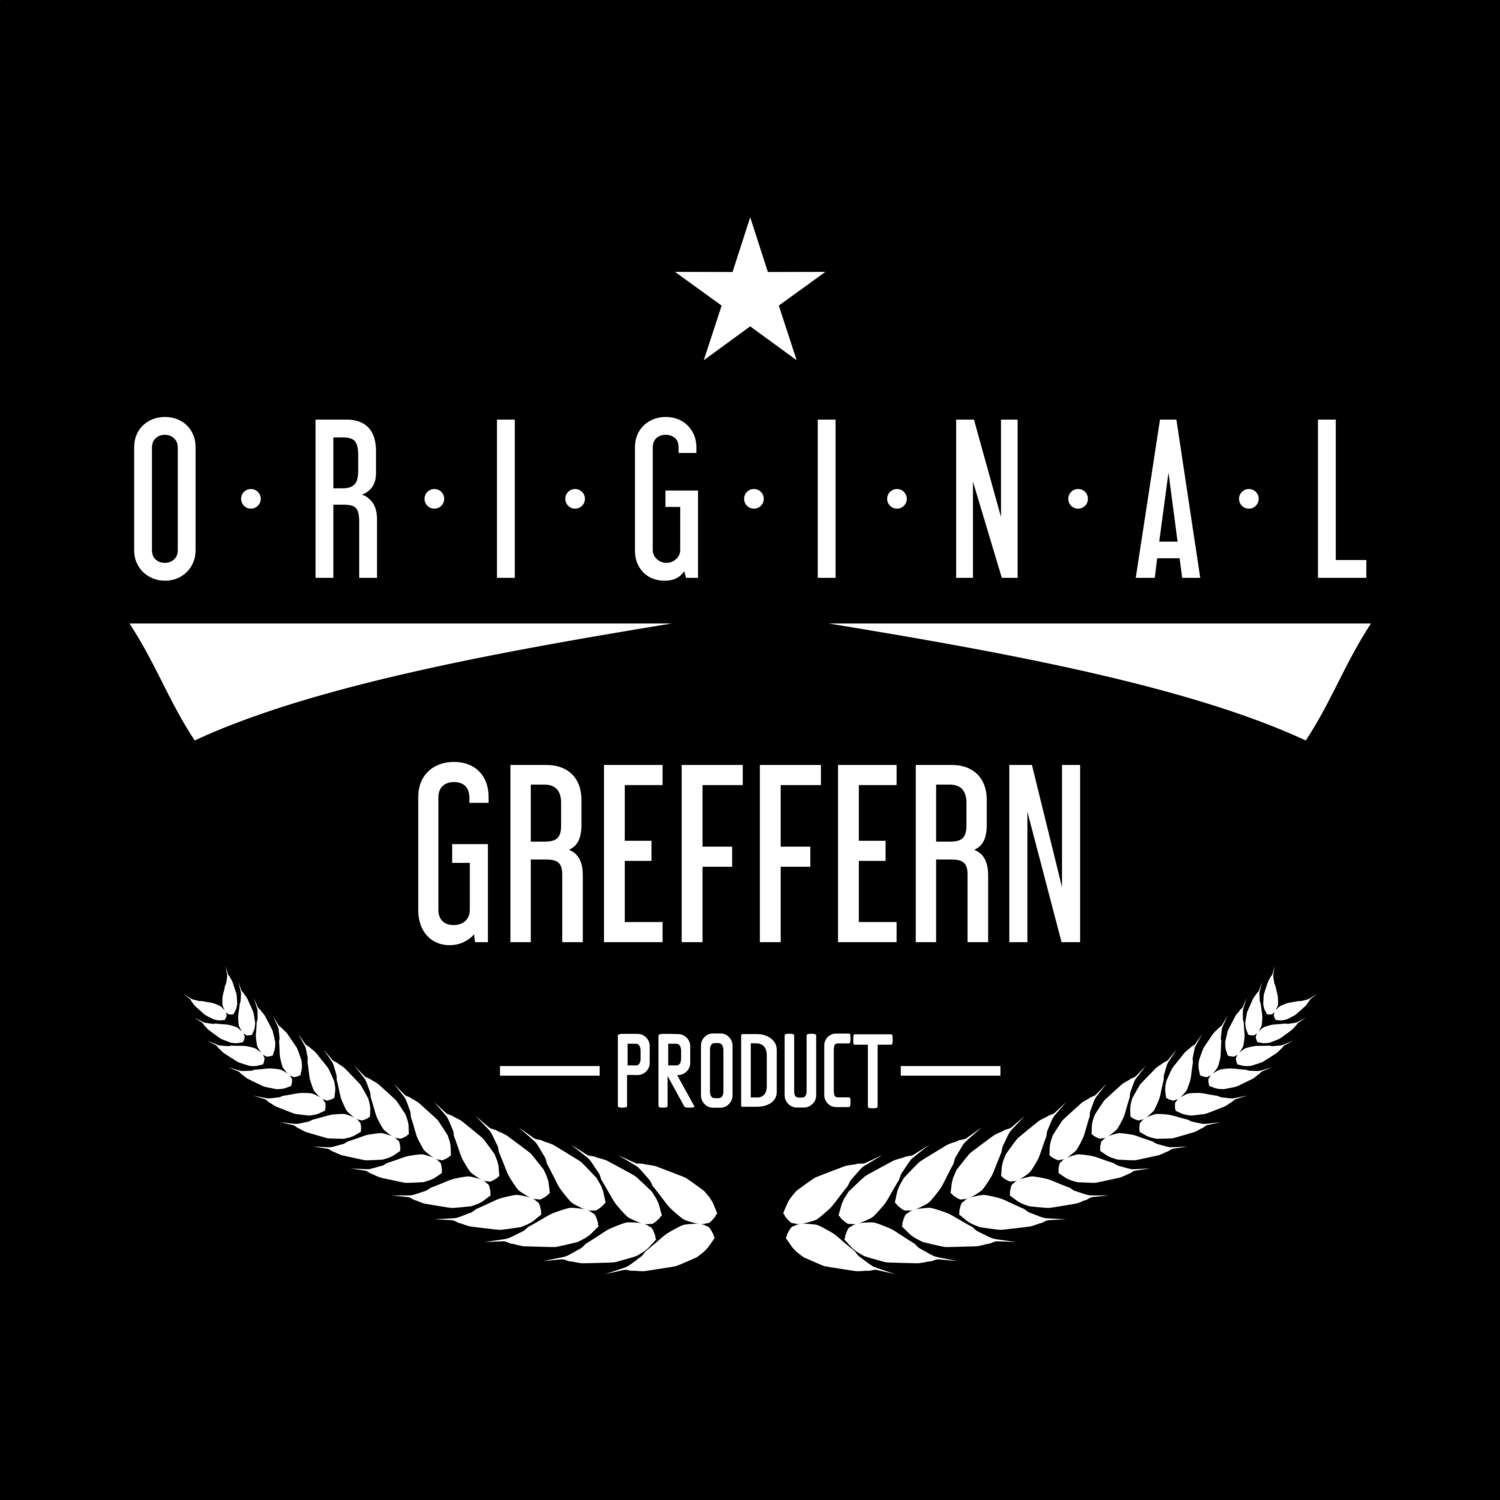 Greffern T-Shirt »Original Product«